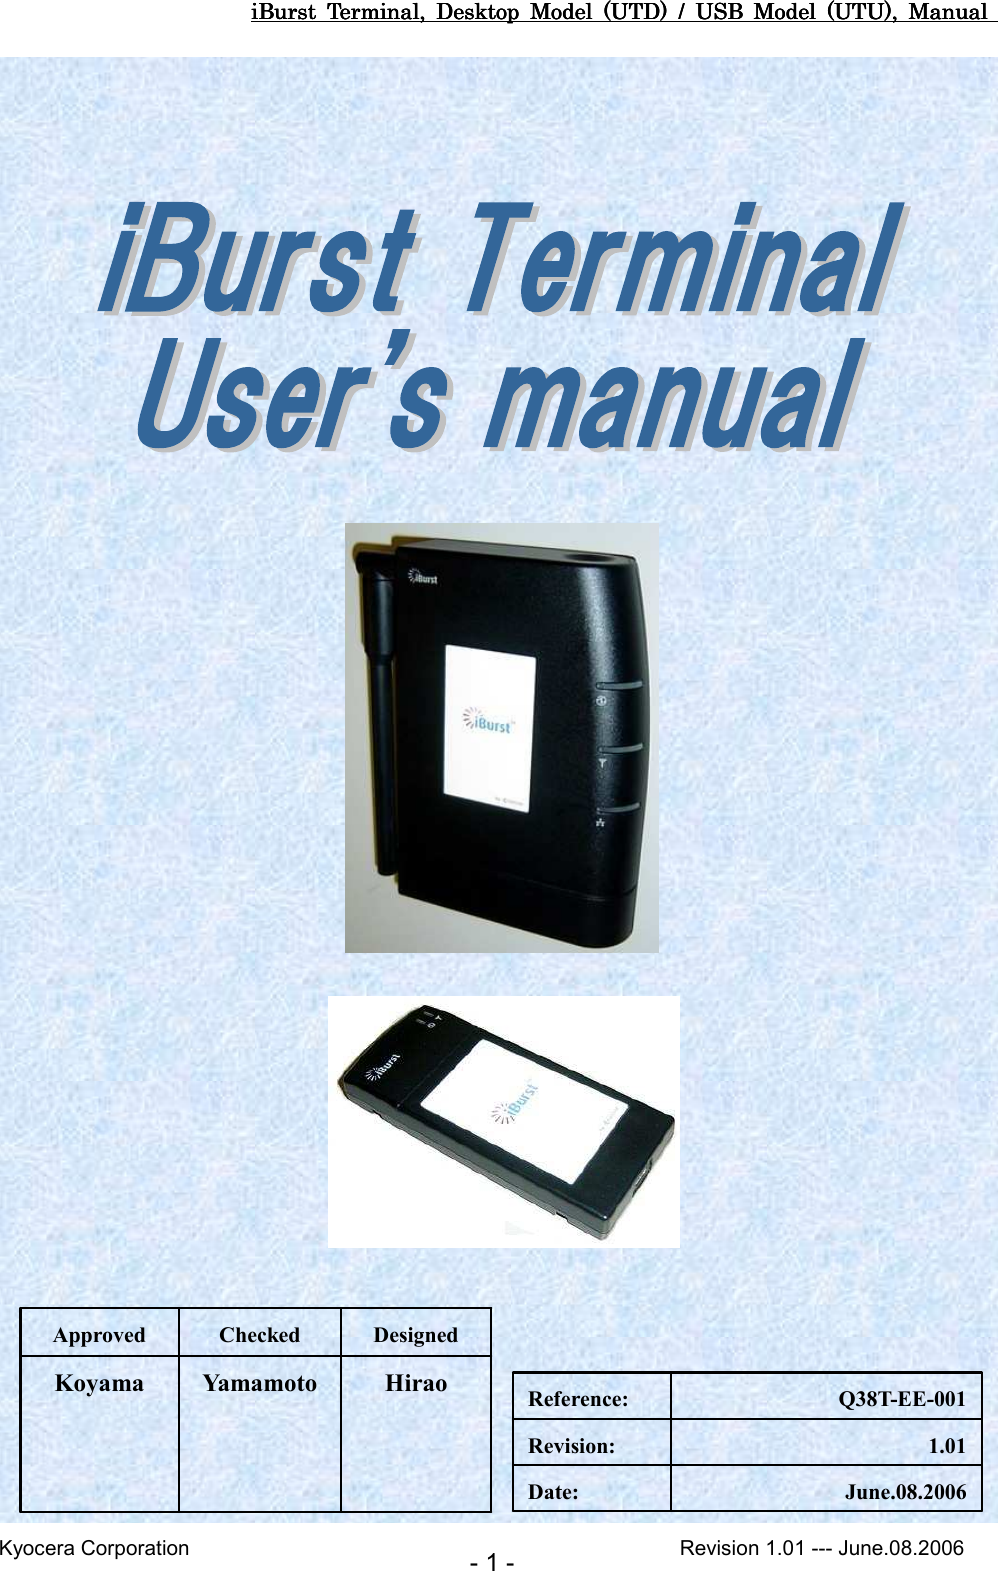 iBurst  Terminal,  Desktop  Model  (UTD)  /  USB  Model  (UTU),  Manual iBurst  Terminal,  Desktop  Model  (UTD)  /  USB  Model  (UTU),  Manual iBurst  Terminal,  Desktop  Model  (UTD)  /  USB  Model  (UTU),  Manual iBurst  Terminal,  Desktop  Model  (UTD)  /  USB  Model  (UTU),  Manual       Kyocera Corporation                                                                                              Revision 1.01 --- June.08.2006 - 1 -                             Hirao Yamamoto Koyama Designed Checked Approved June.08.2006 Date: 1.01 Revision: Q38T-EE-001 Reference: 